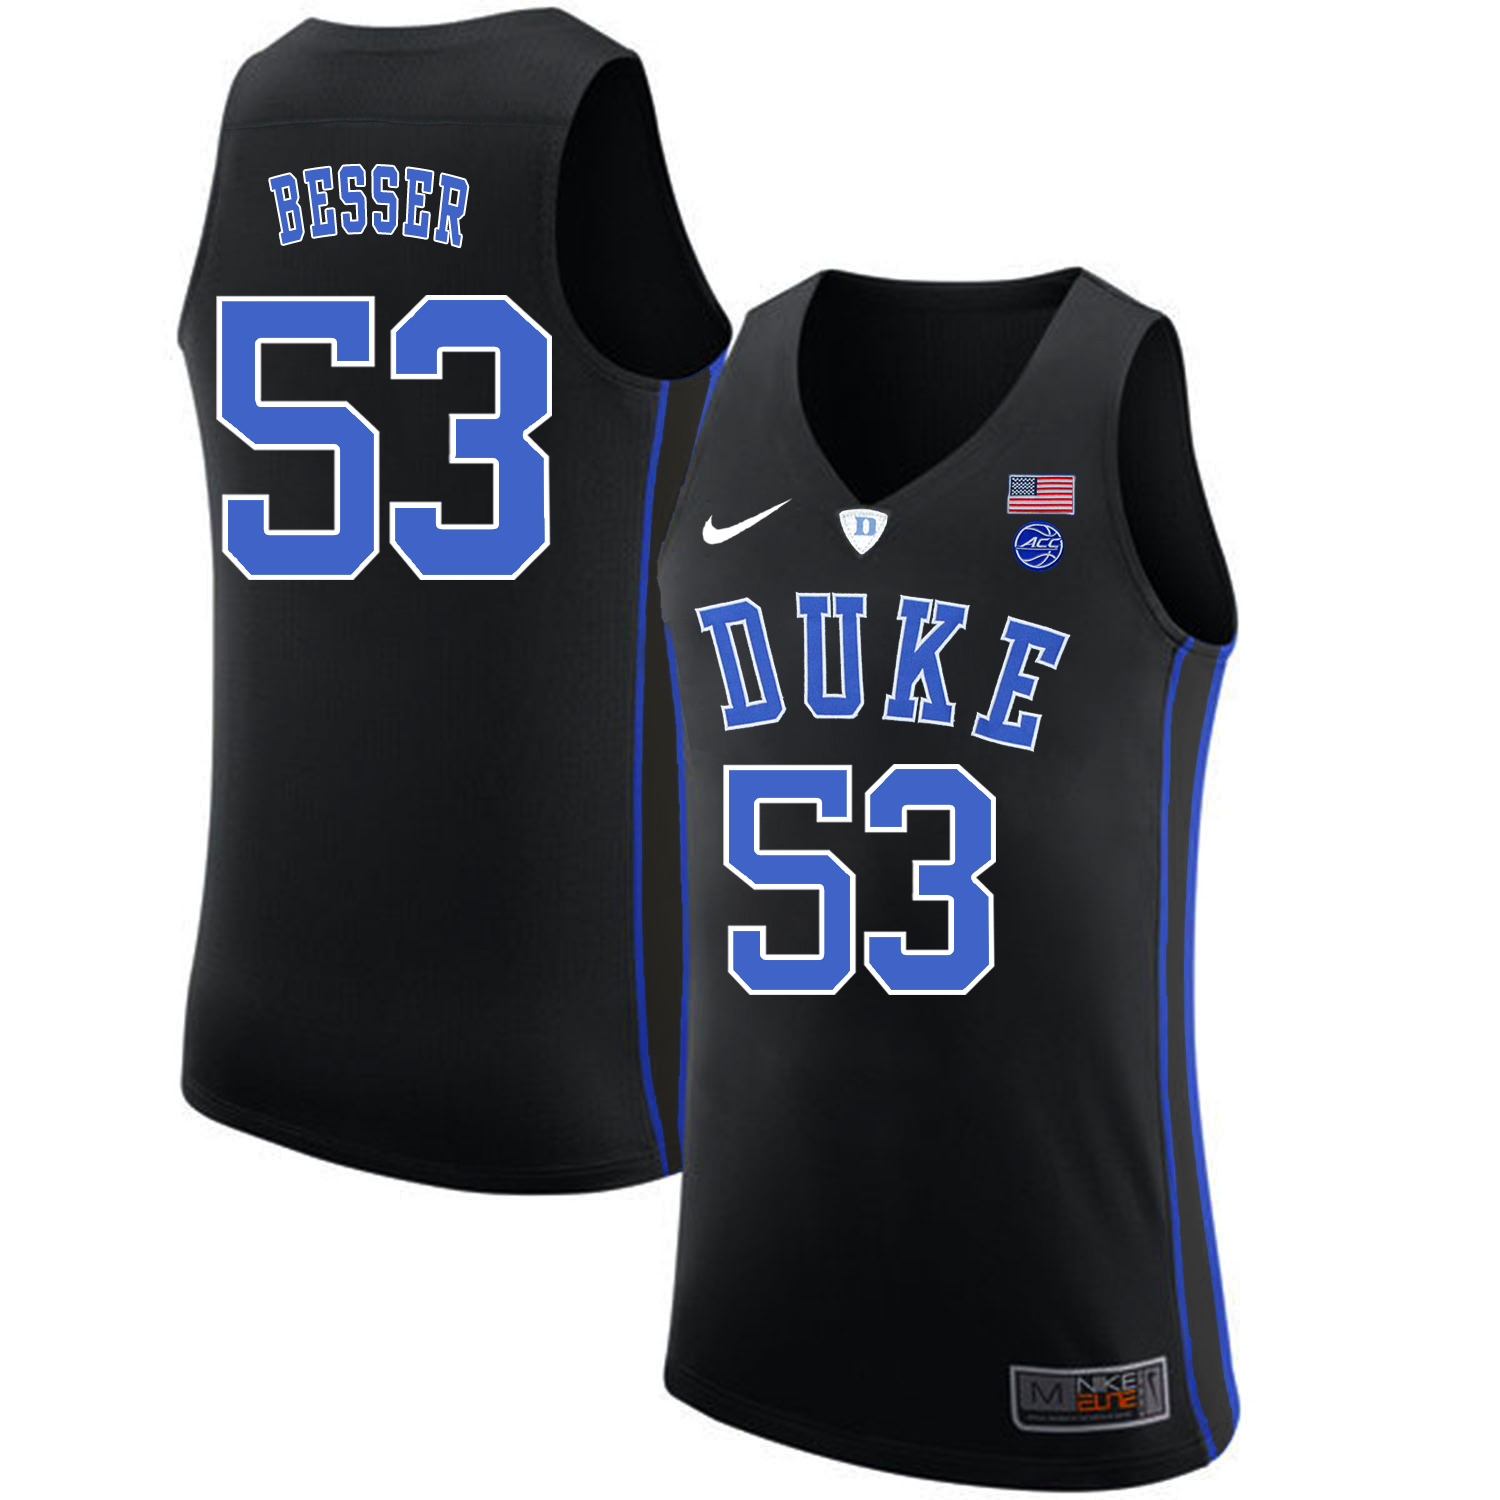 Duke Blue Devils 53 Brennan Besser Black Nike College Basketball Jersey